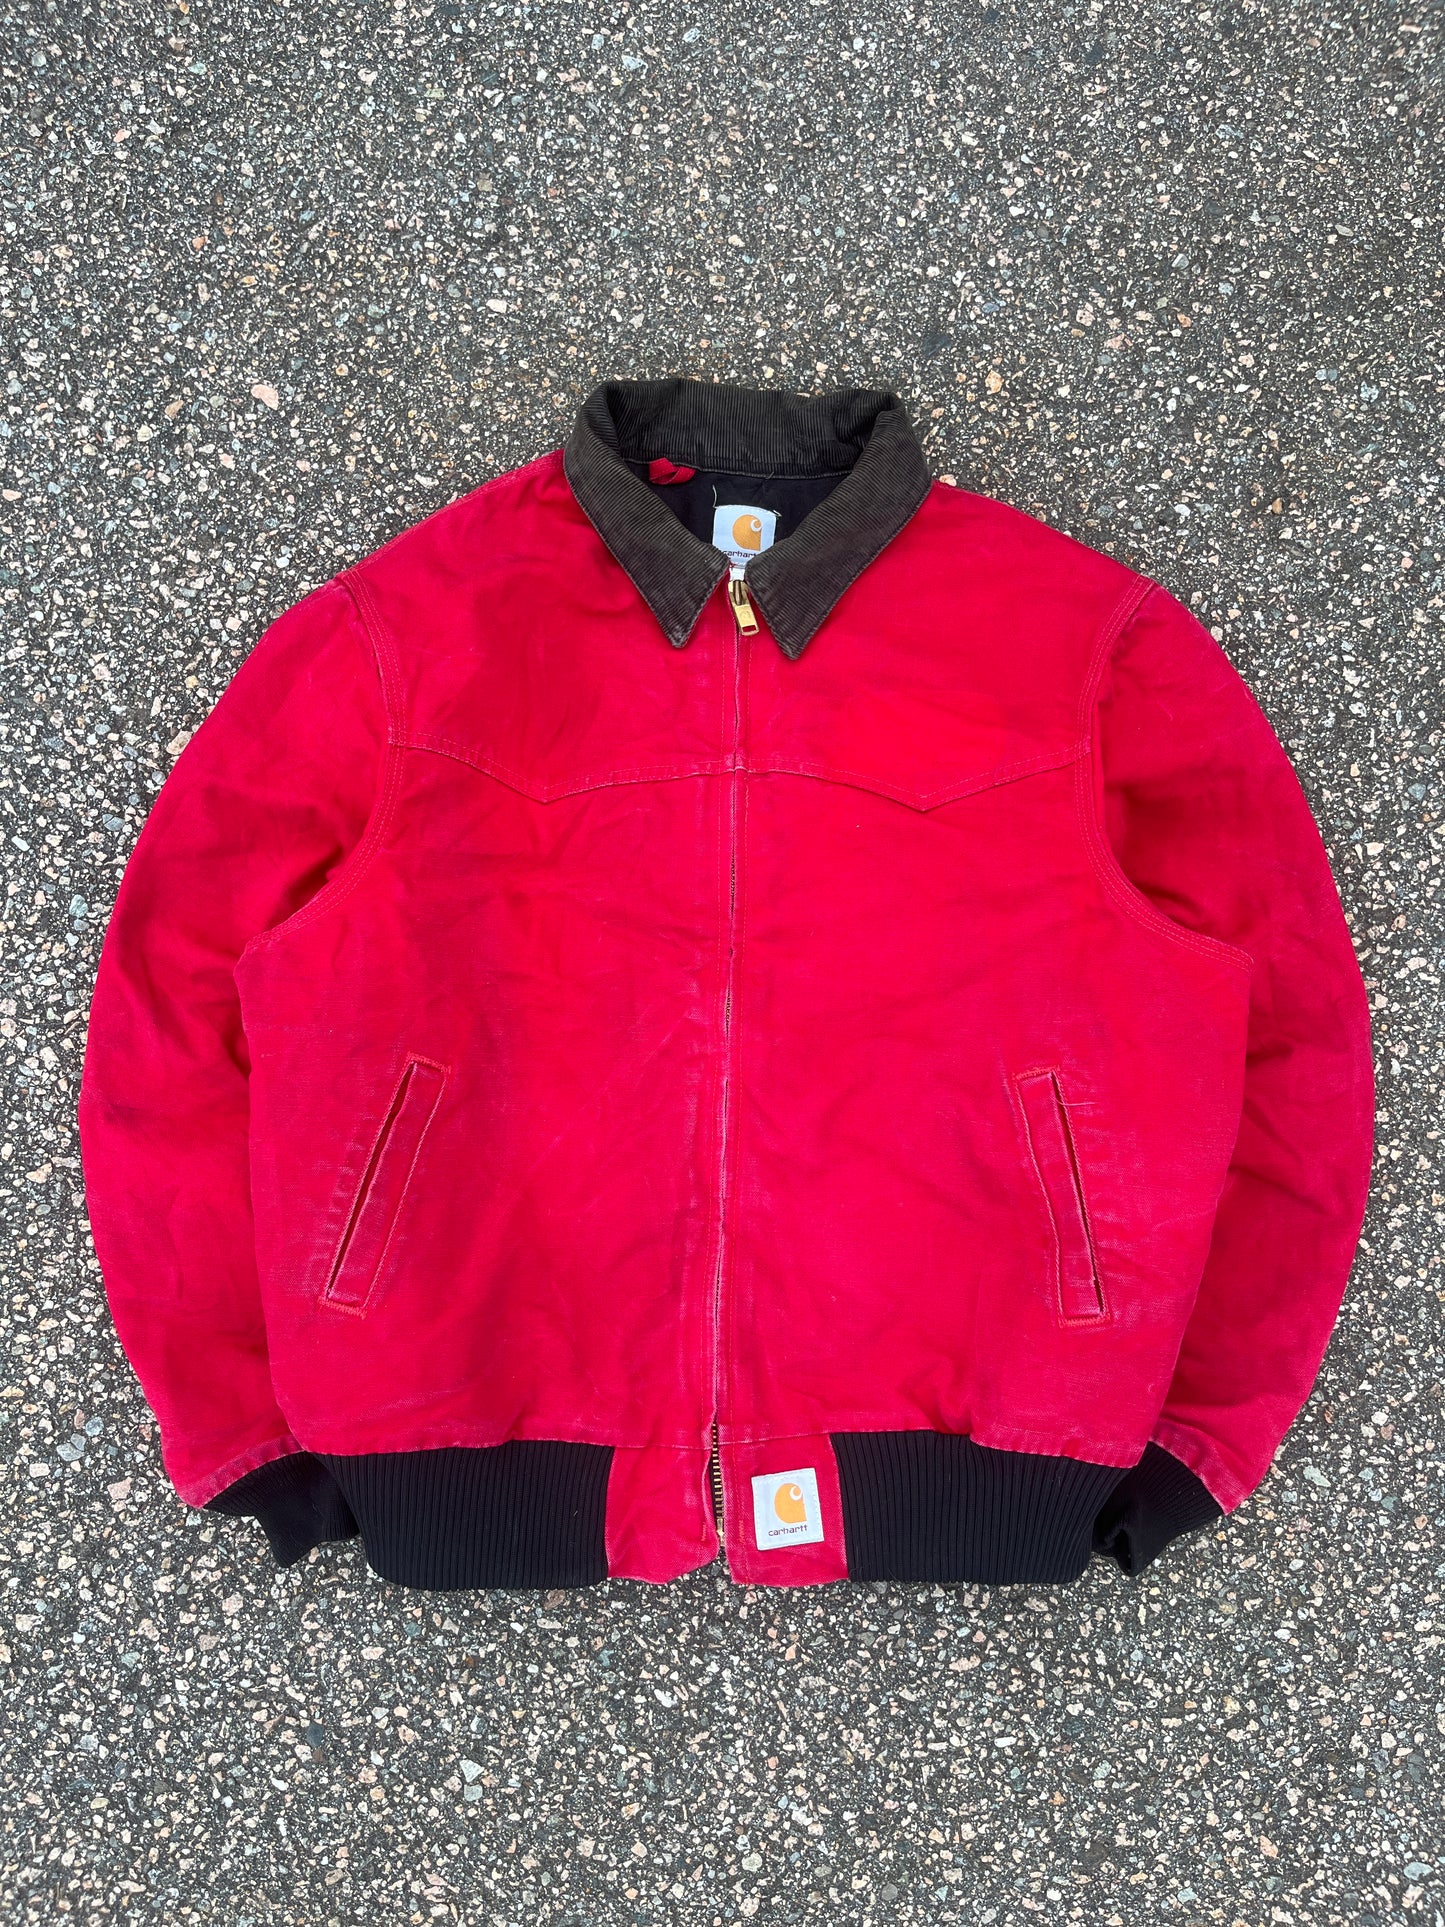 Faded Strawberry Red Carhartt Santa Fe Jacket - Large